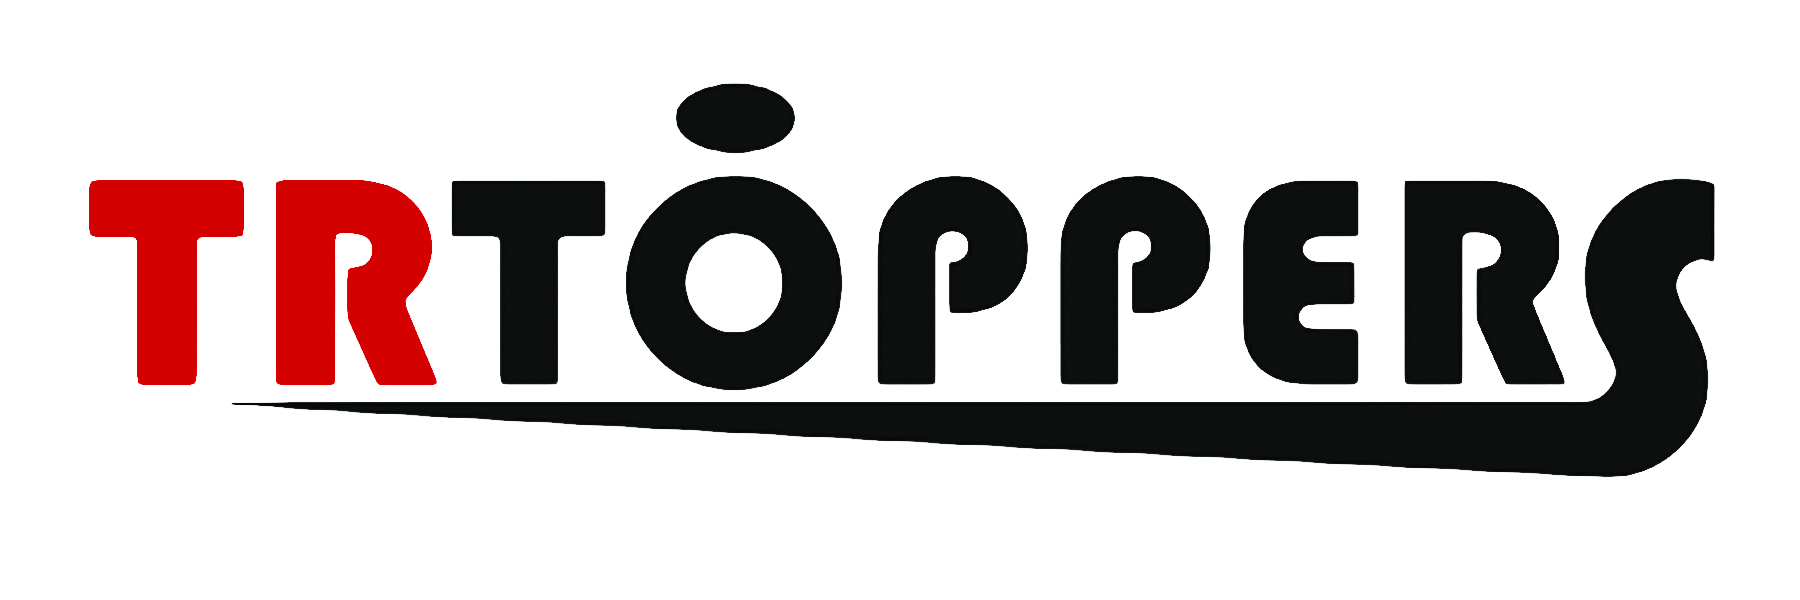 https://fame-usa.com/wp-content/uploads/2021/02/TR-Topper-Logo.jpg